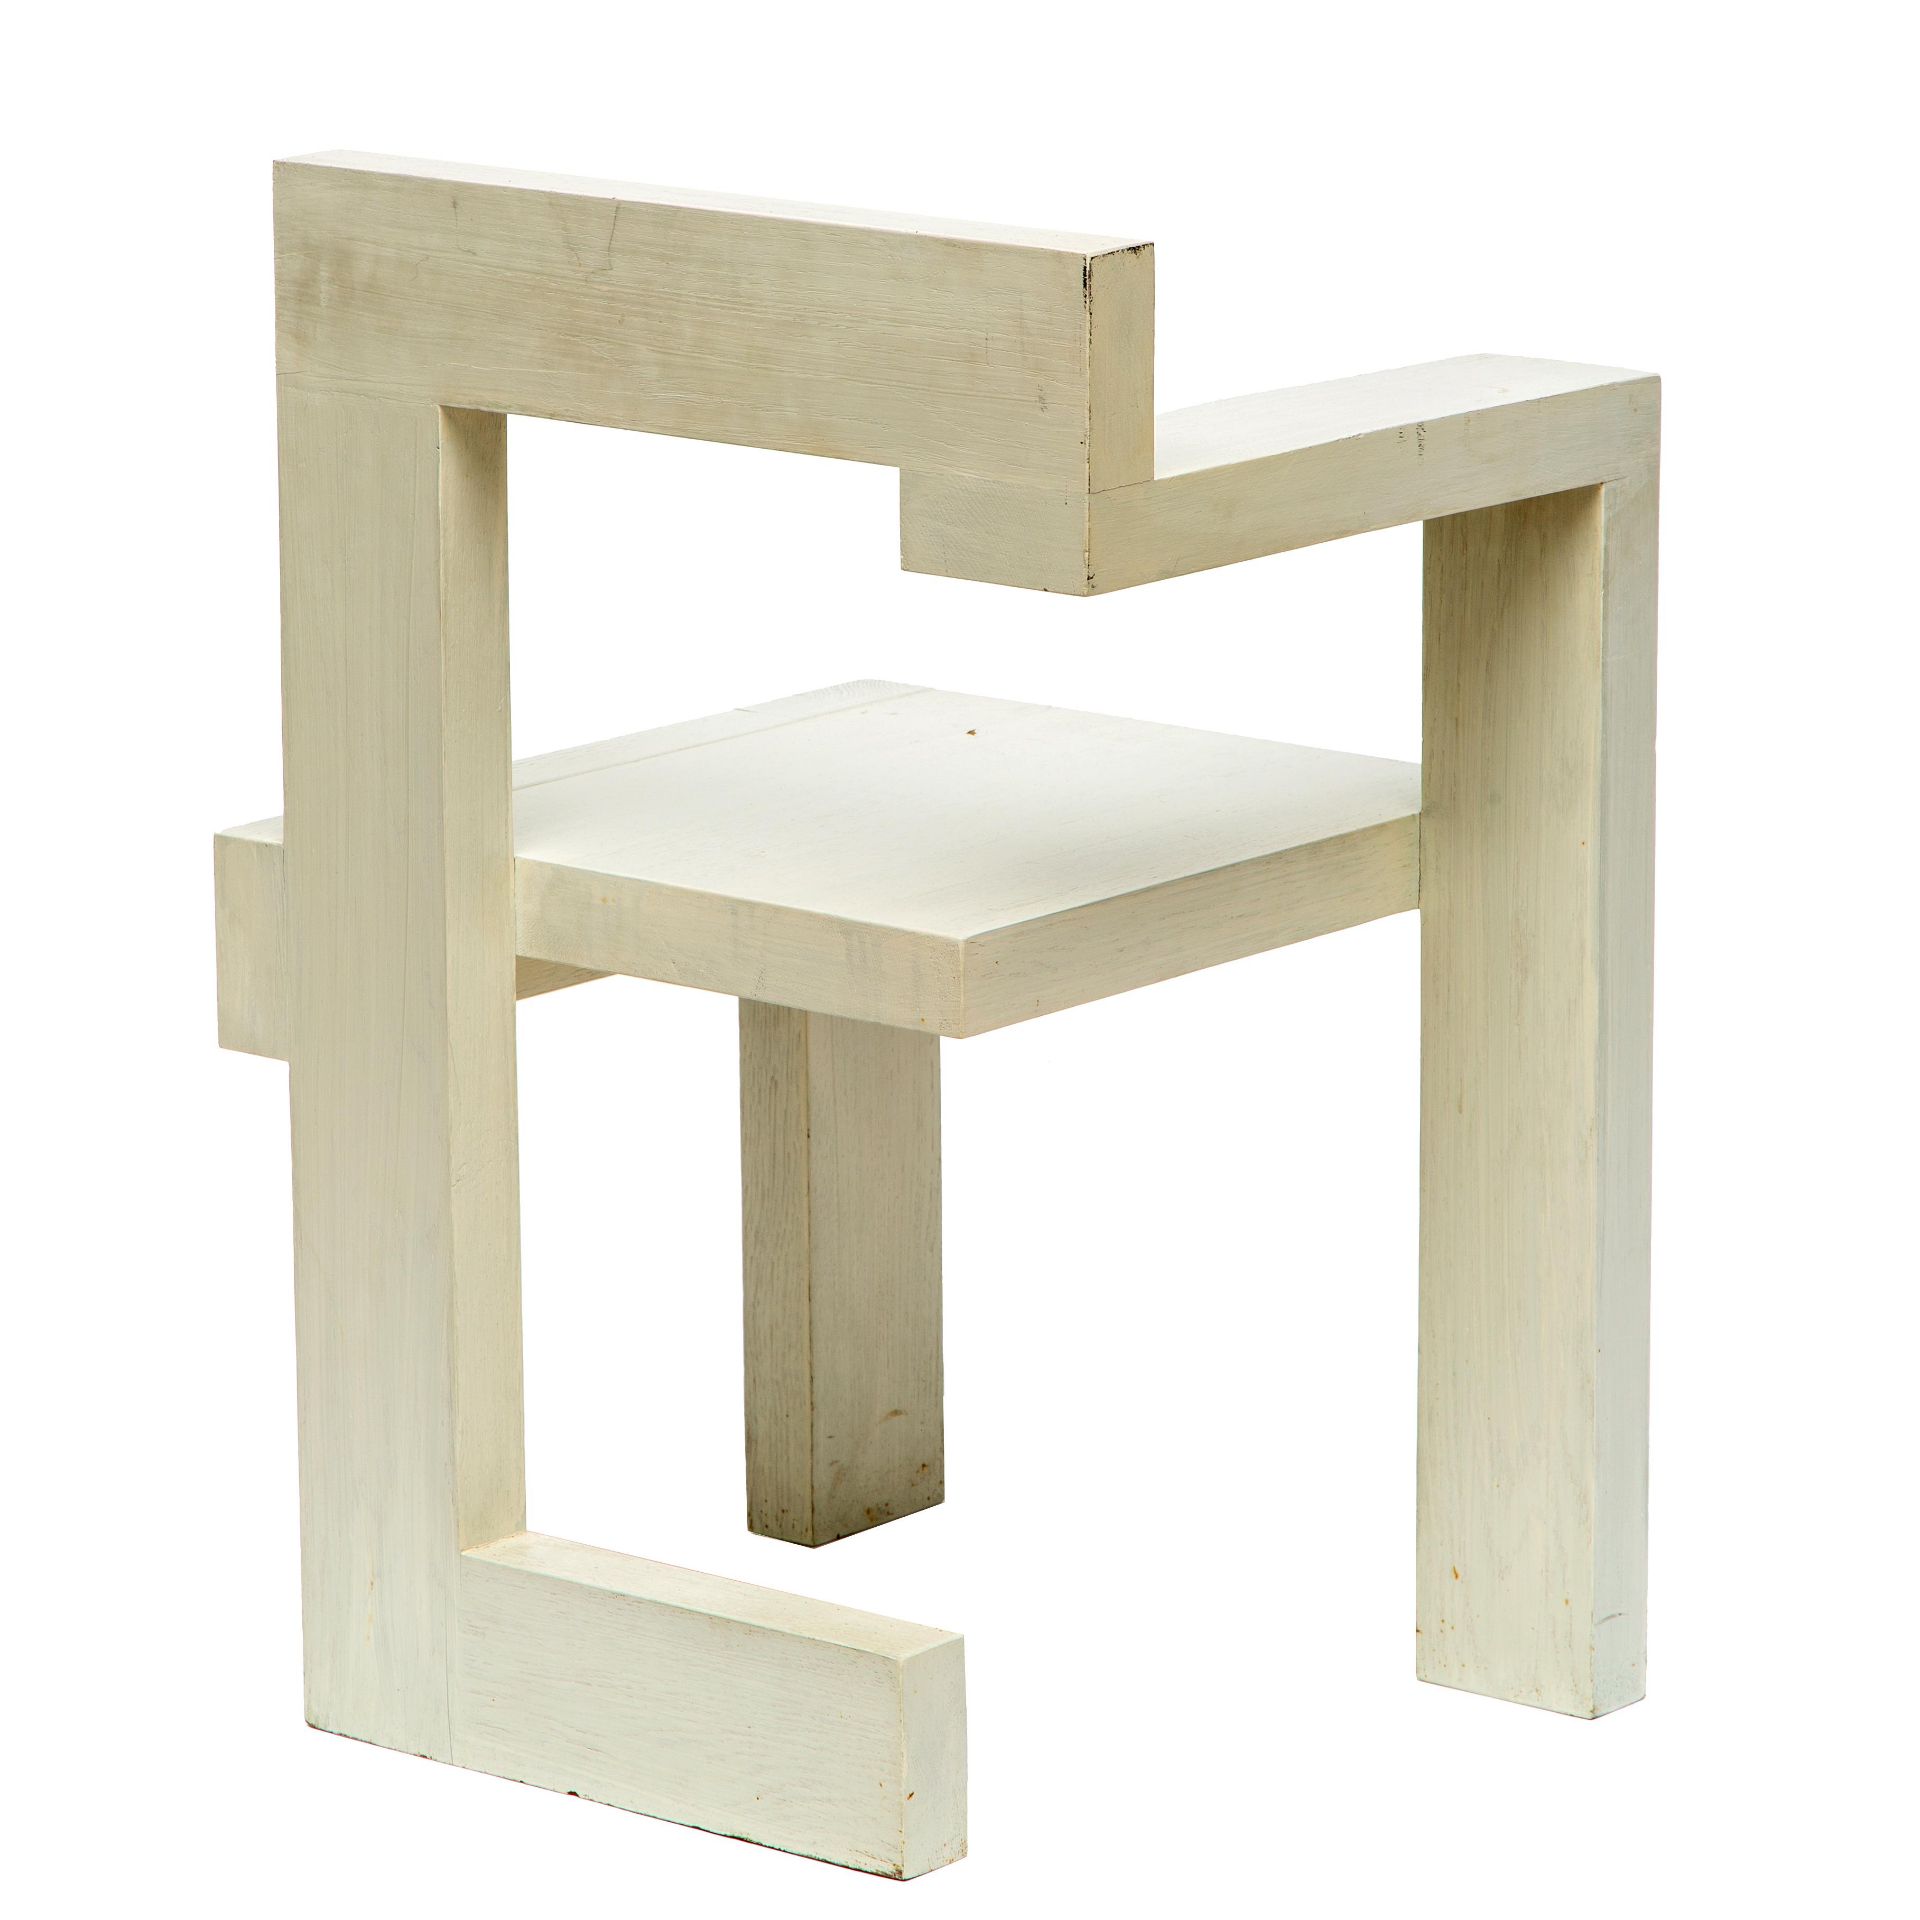 Gerrit Rietveld (1888-1964), Steltman stoel. - Image 5 of 6